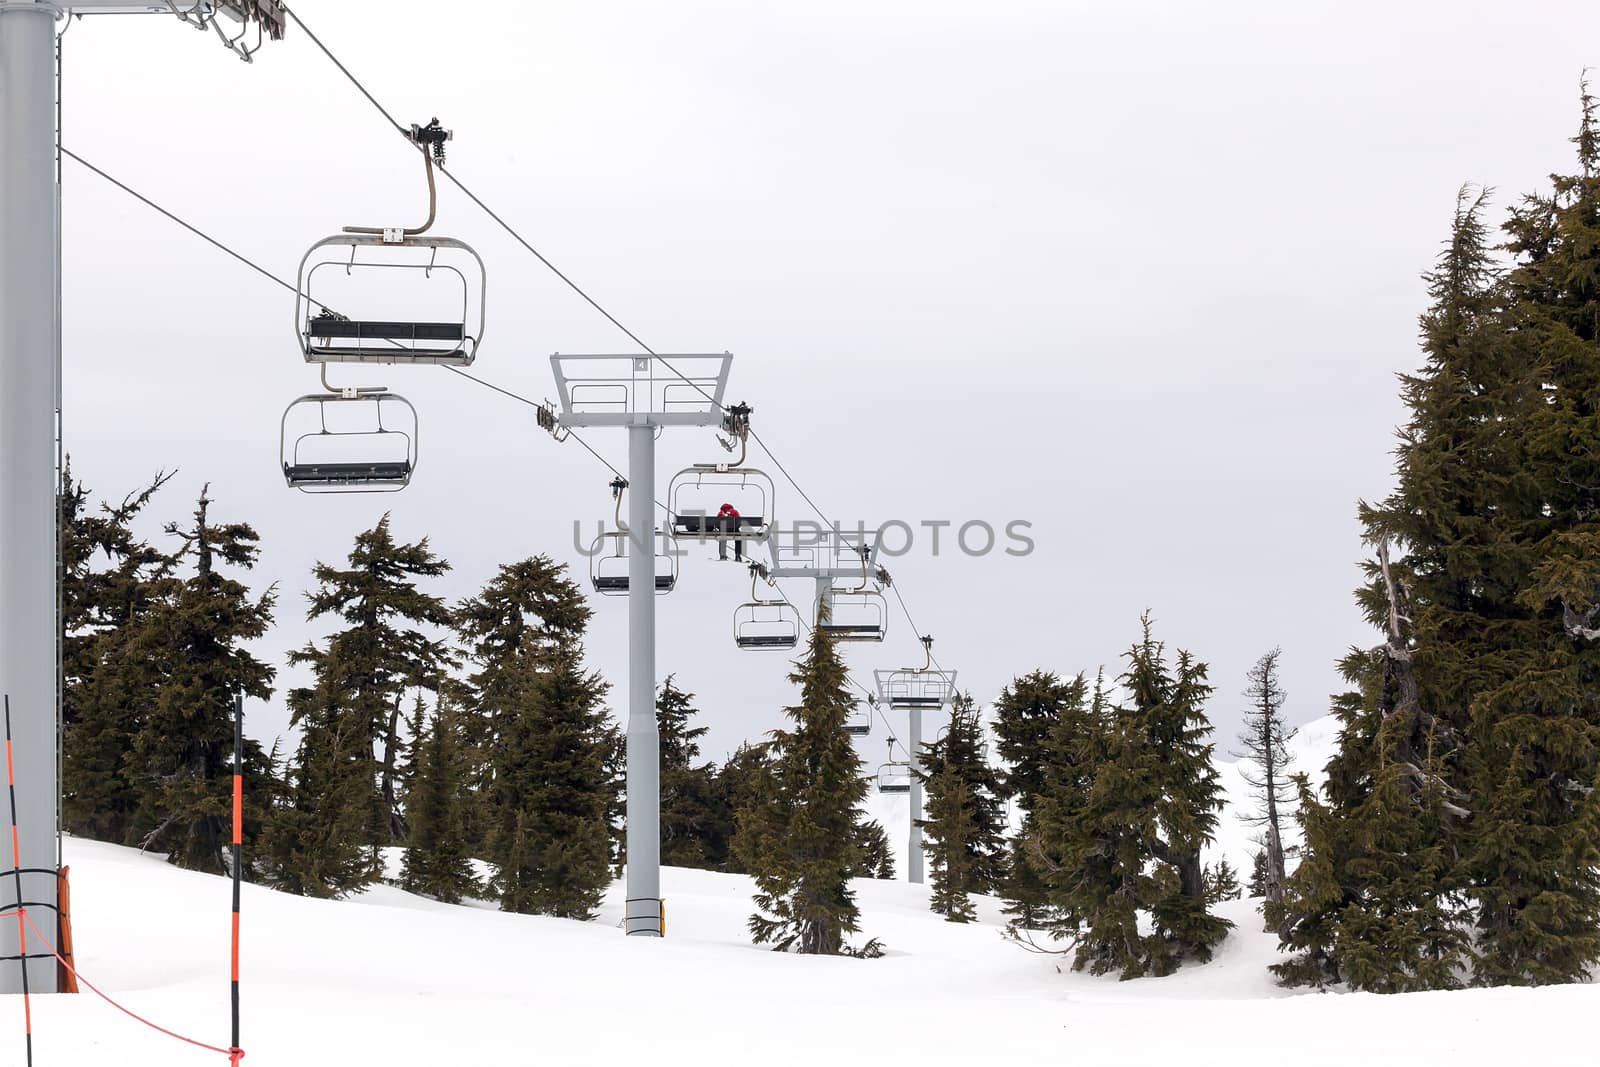 Ski Lifts at Mount Hood Ski Resort in Goverment Camp Oregon during winter skiing season